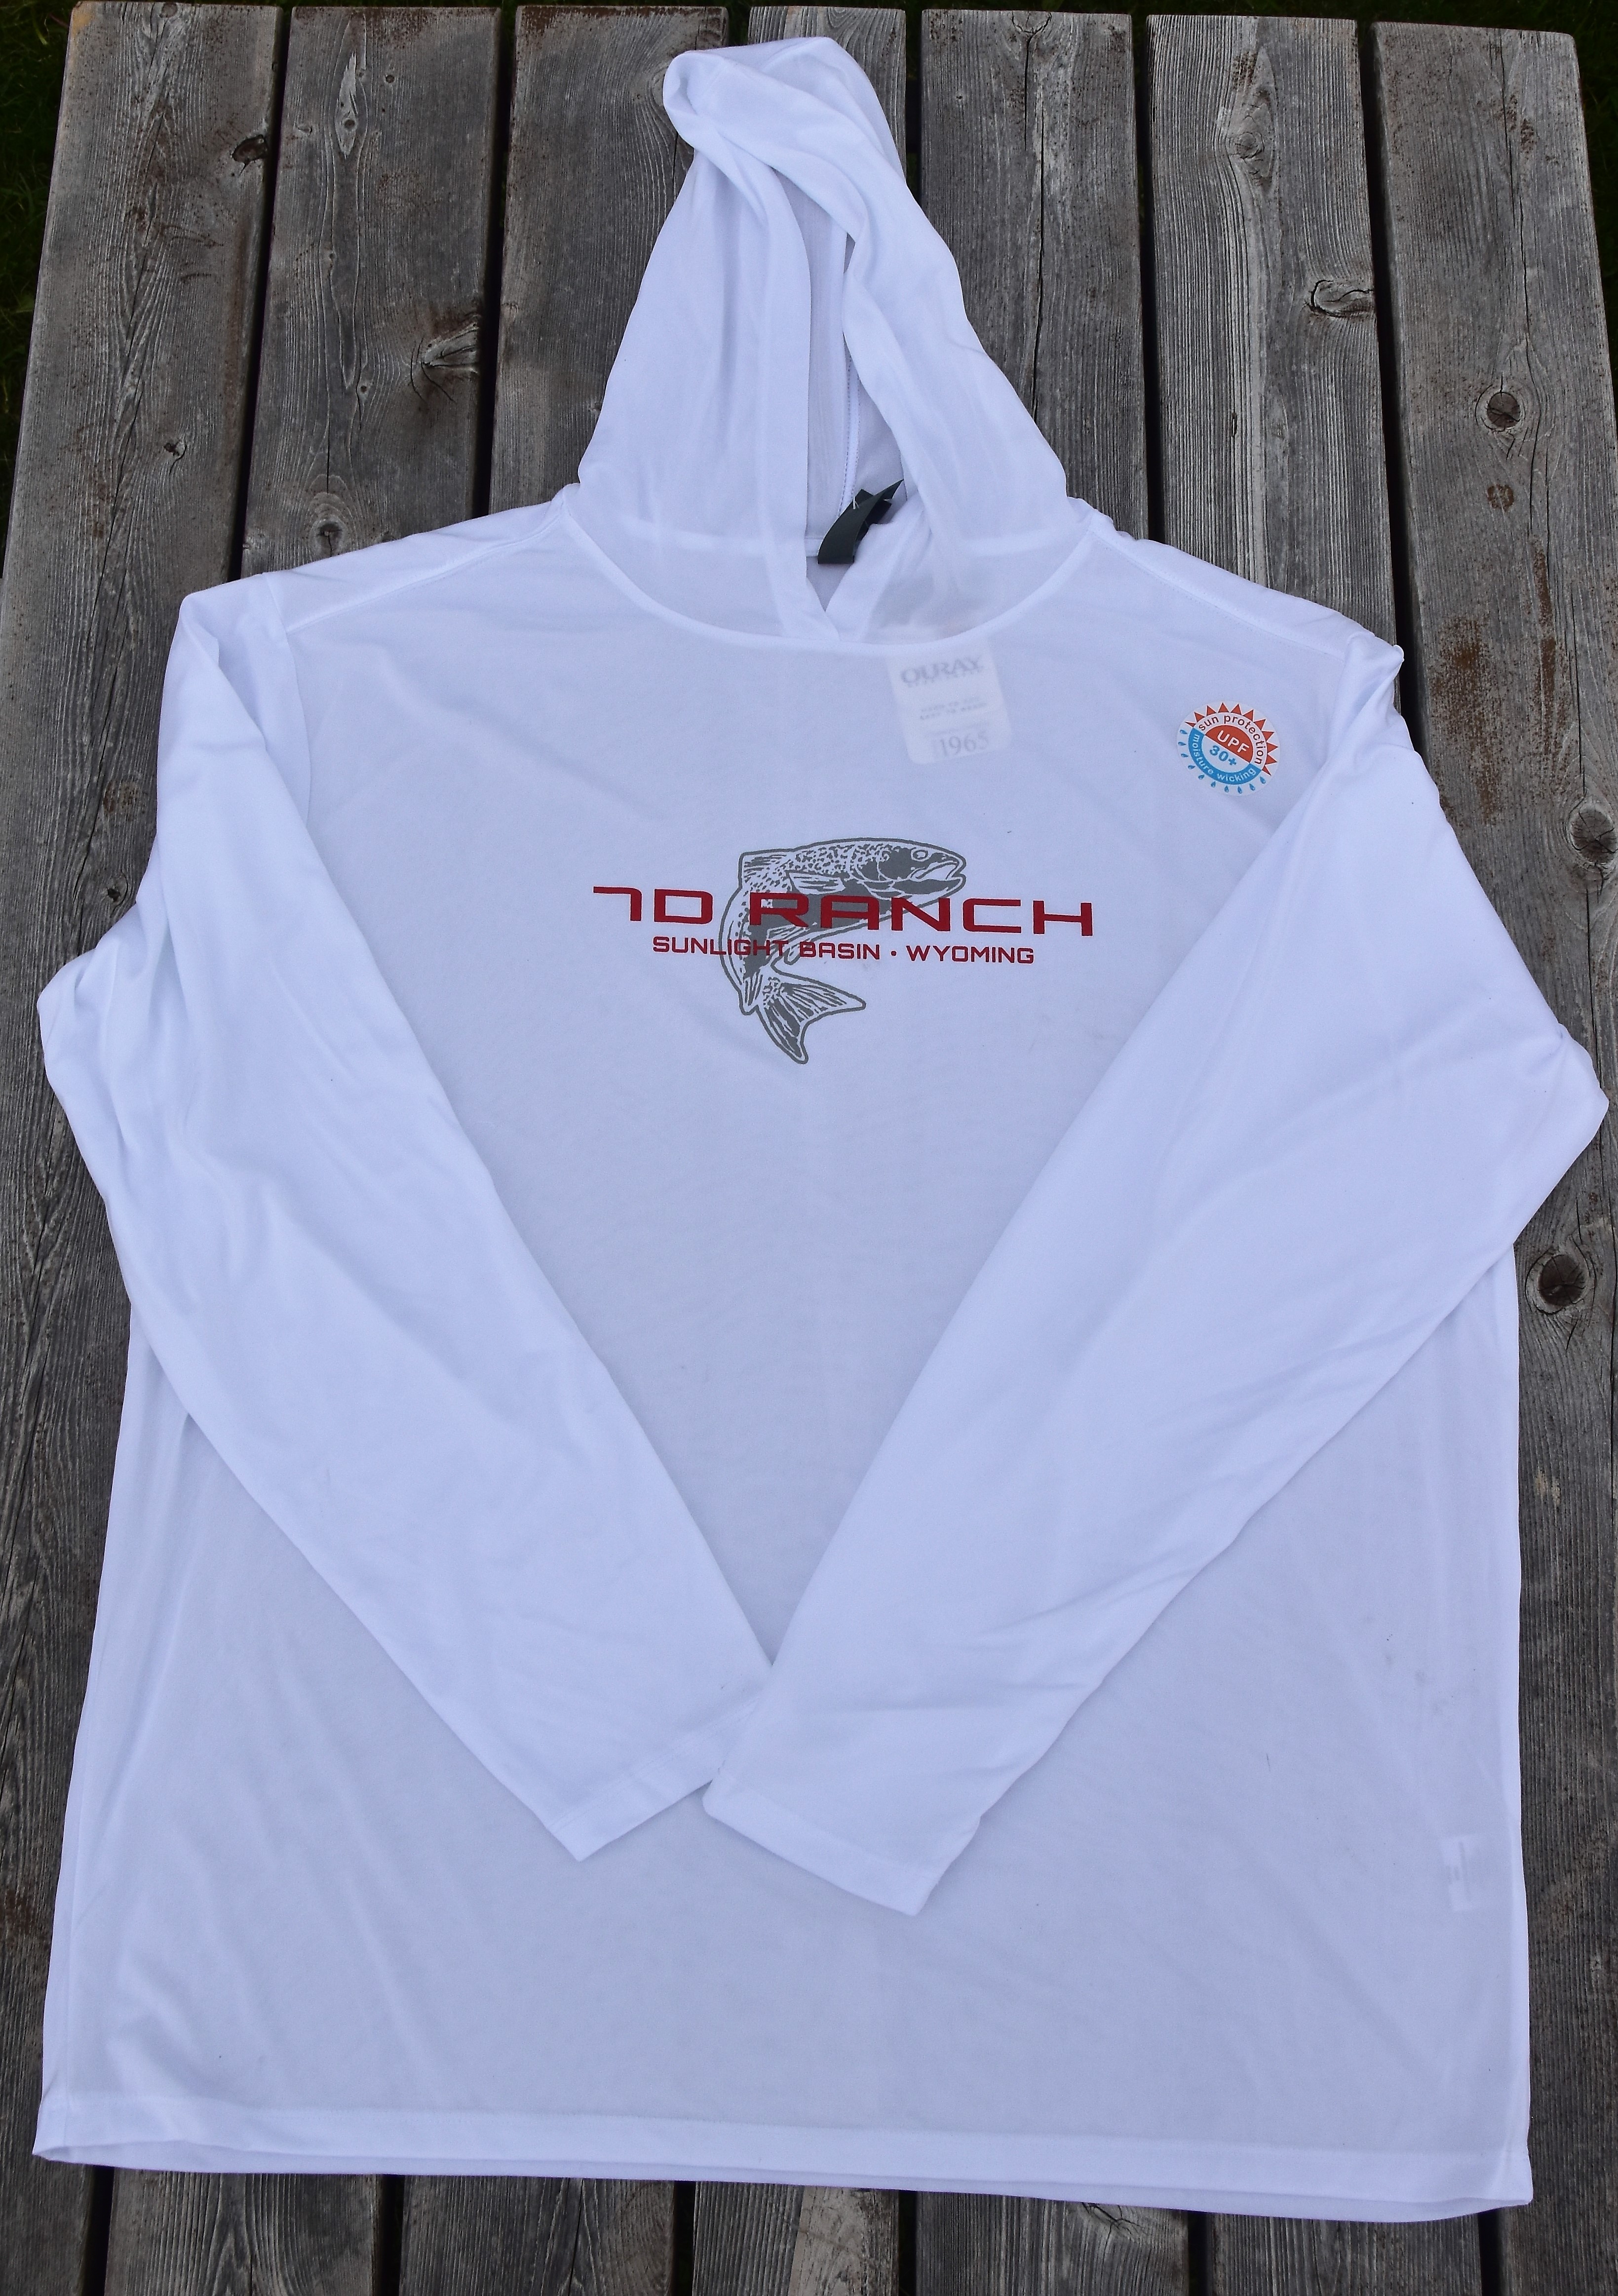 Long-sleeved Sport Fishing Shirt w/Hood (White) - 7D Ranch